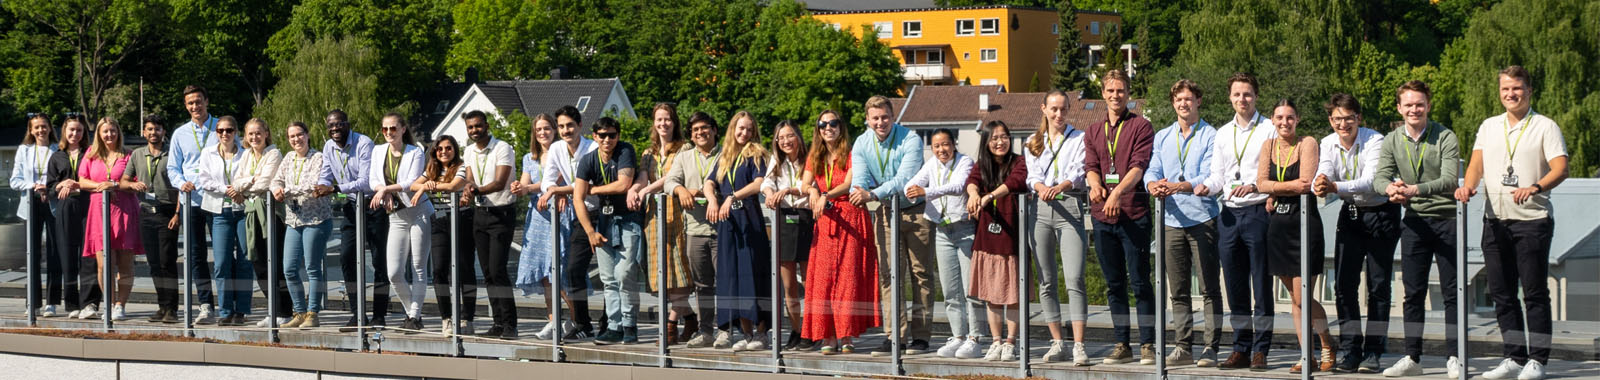 Summer interns at the Yara Headquarters in Oslo